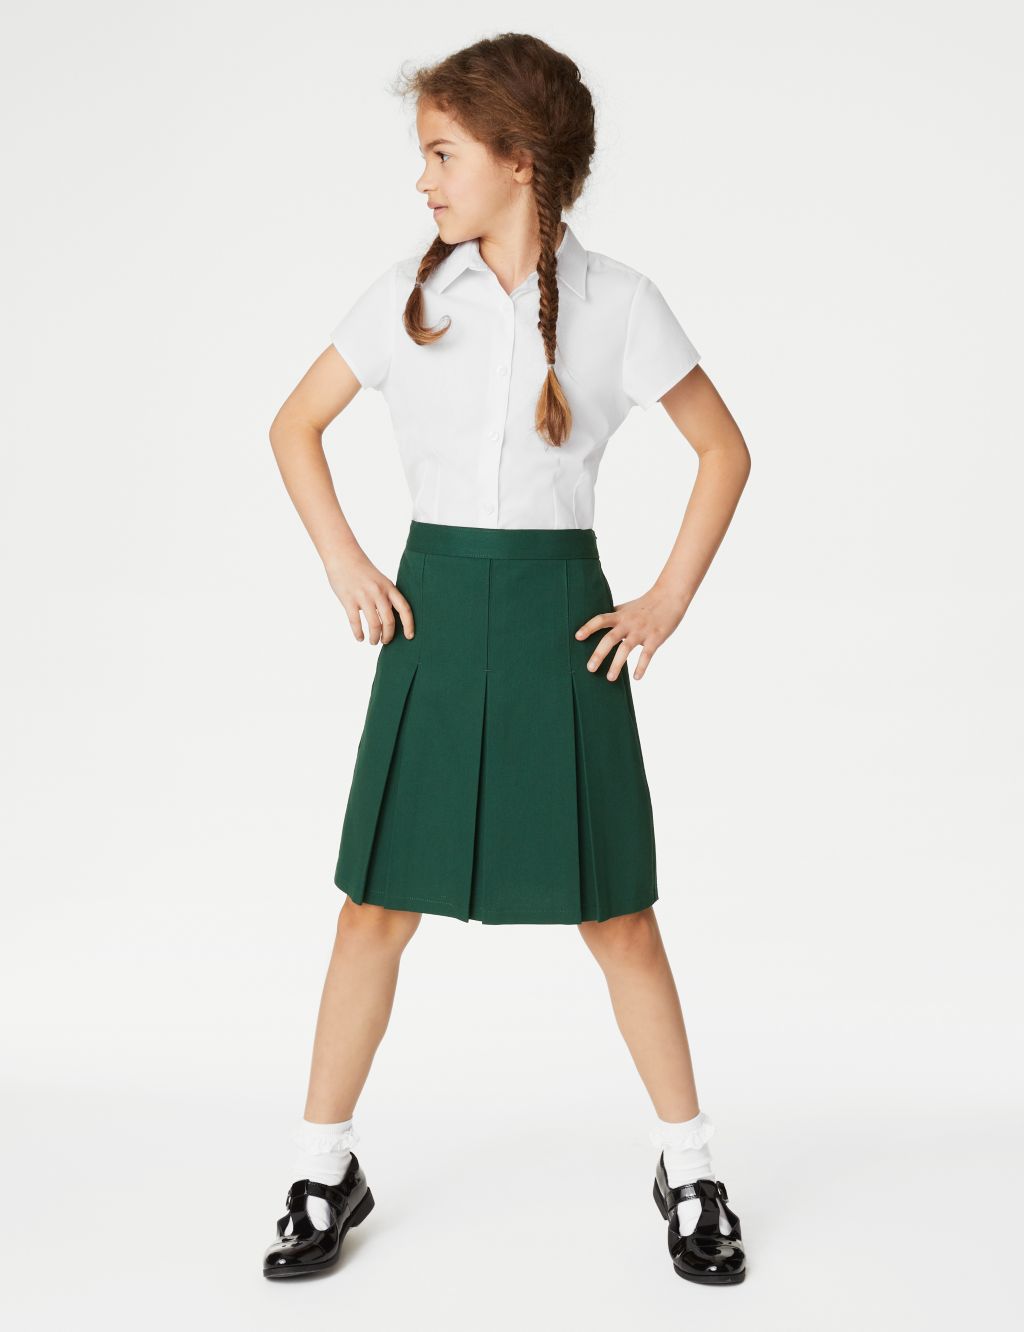 2pk Girls' Cap Sleeve Easy Iron School Shirts (2-16 Yrs) image 3